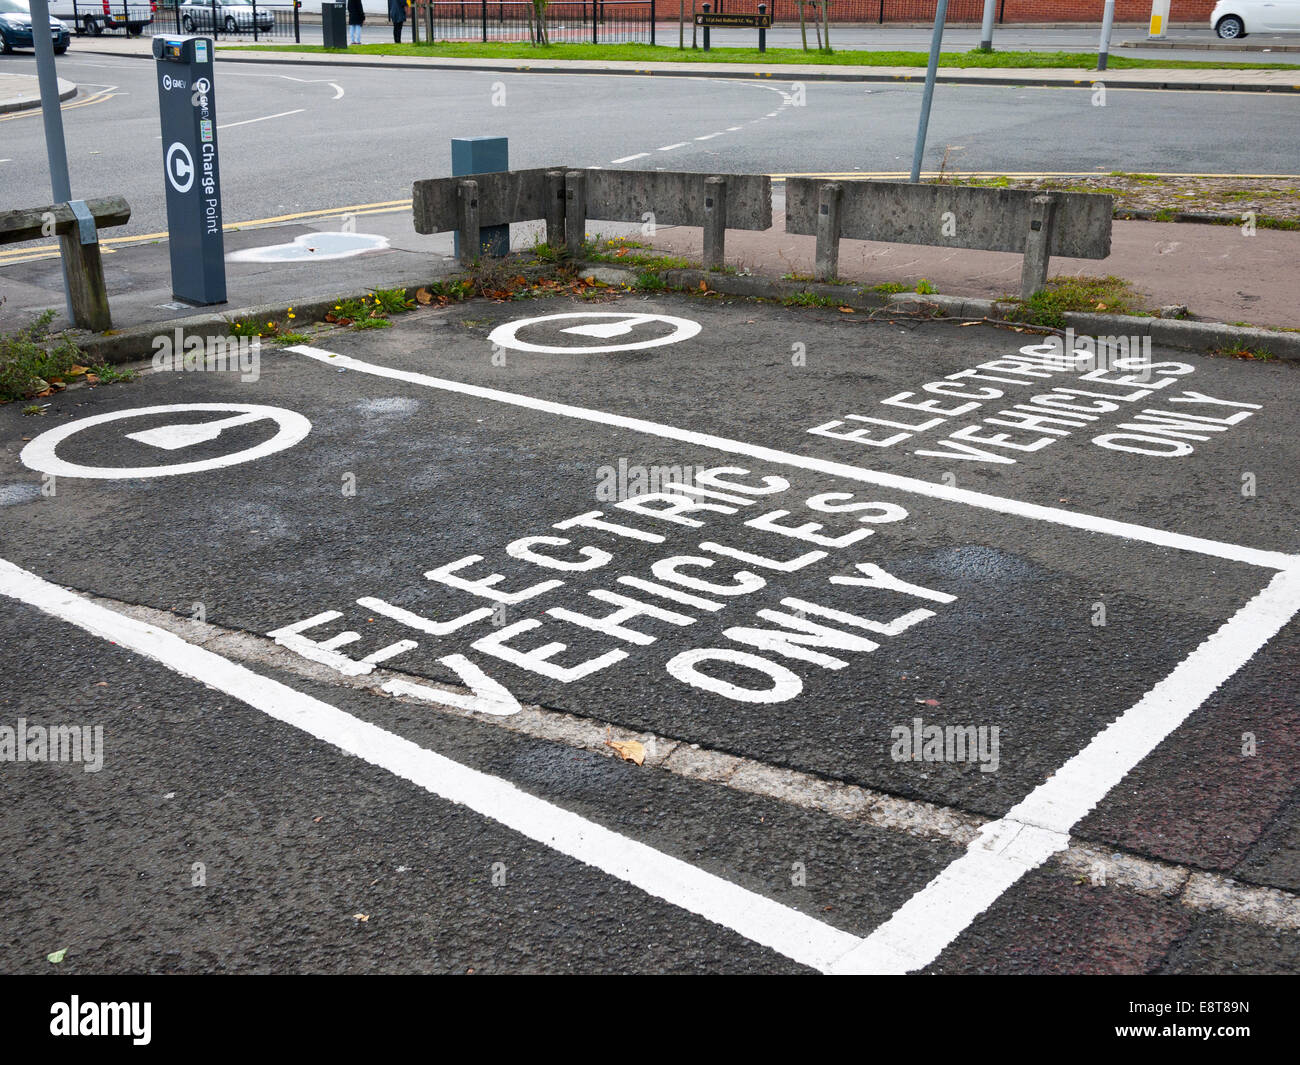 Electric Vehicle charging point, England, UK. Stock Photo